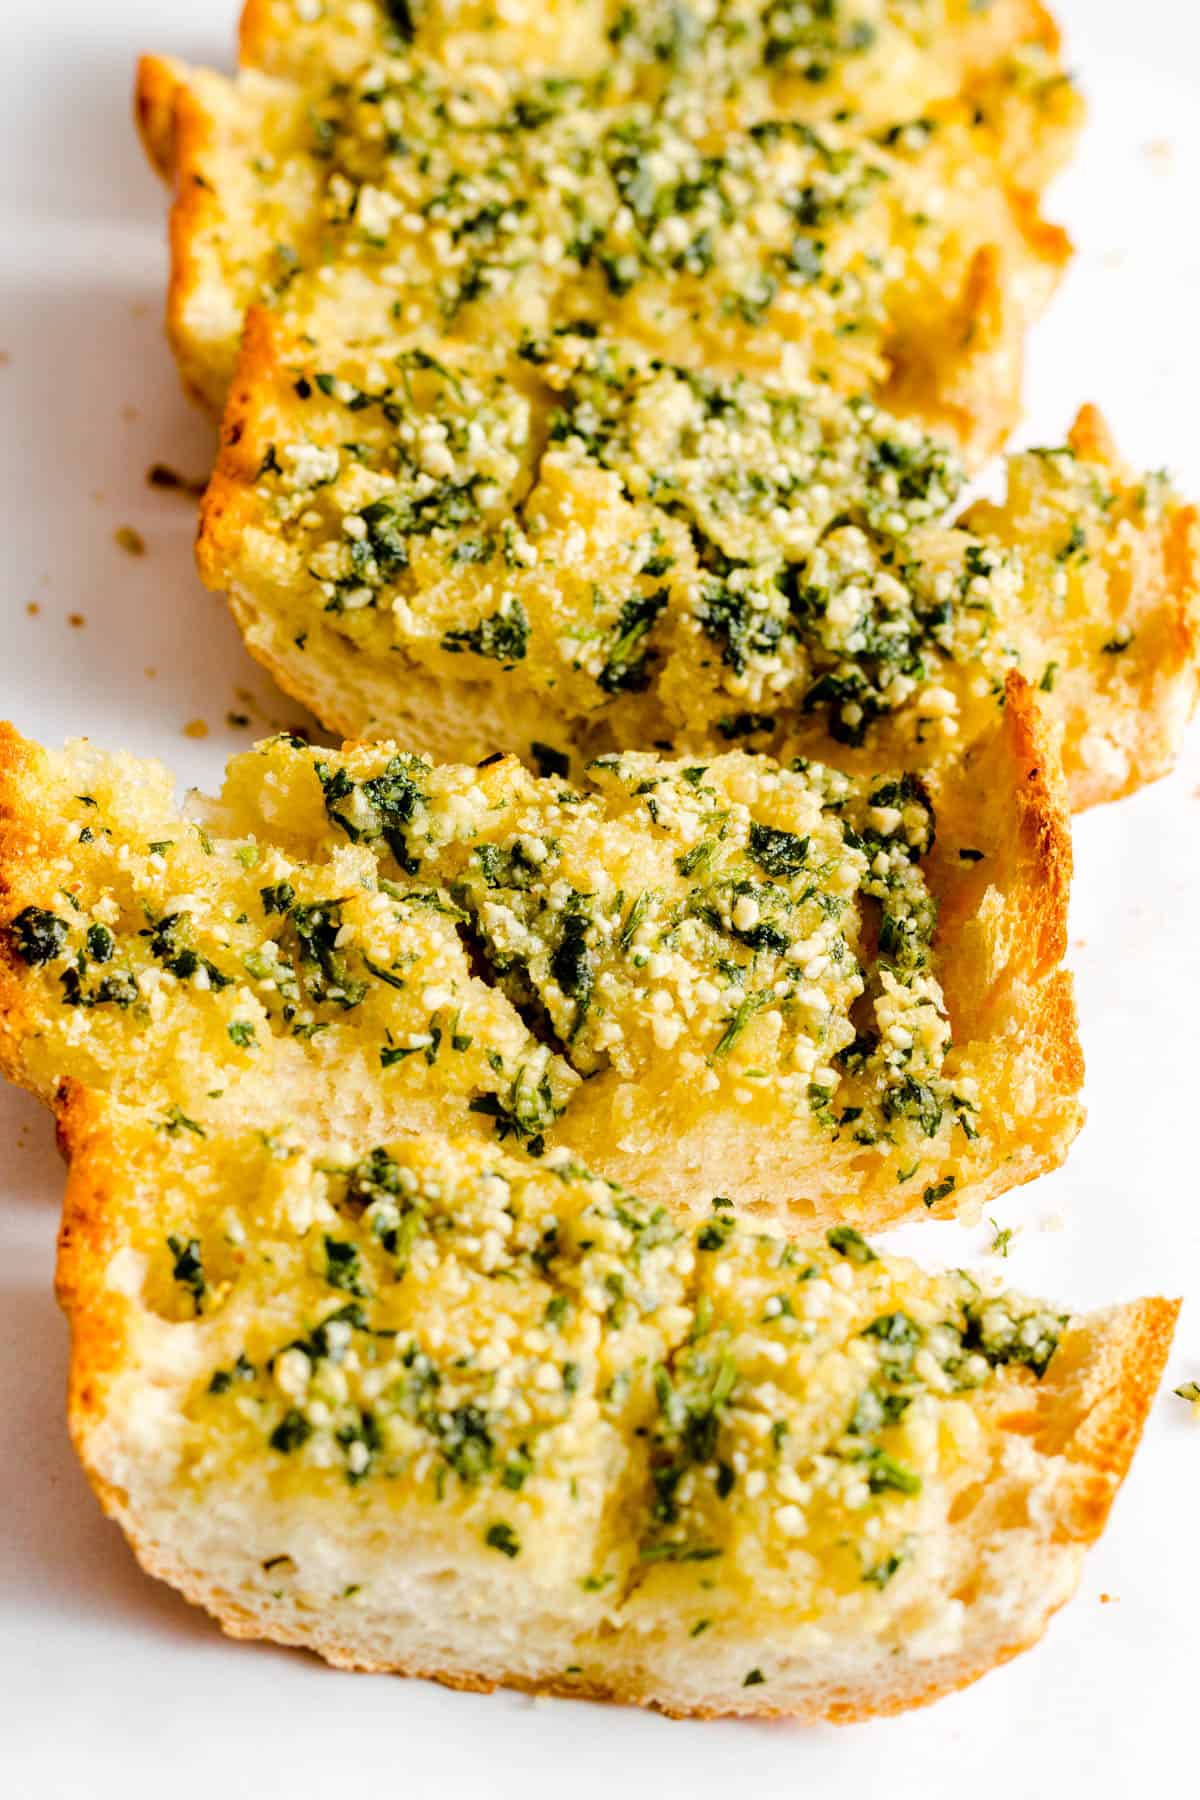 Crusty garlic bread slices with parsley.